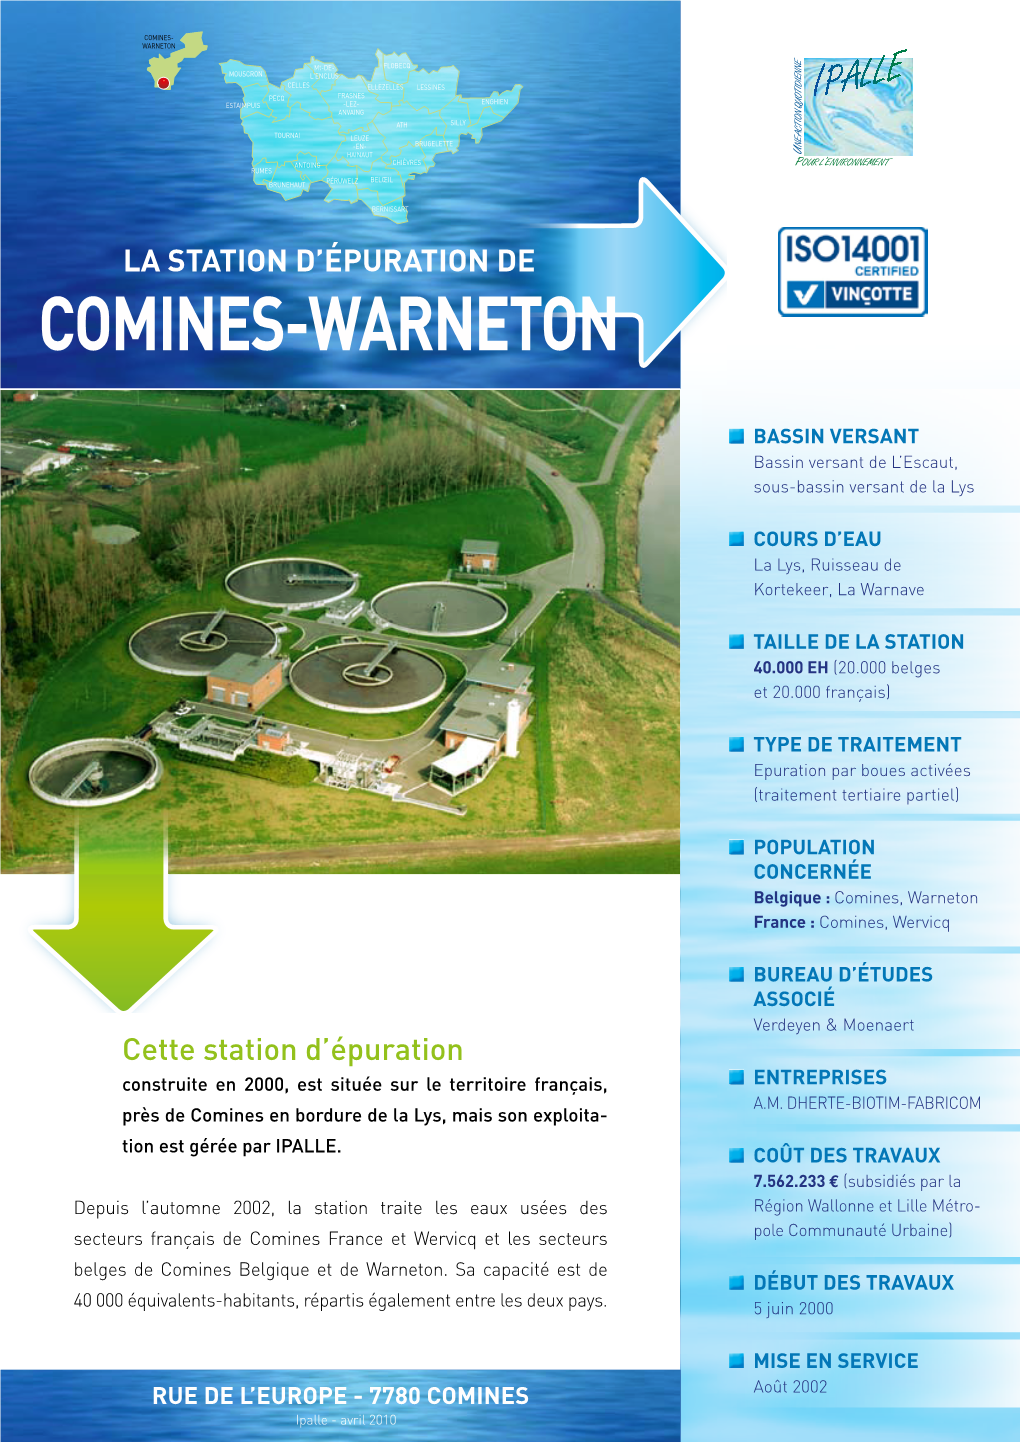 Comines-Warneton